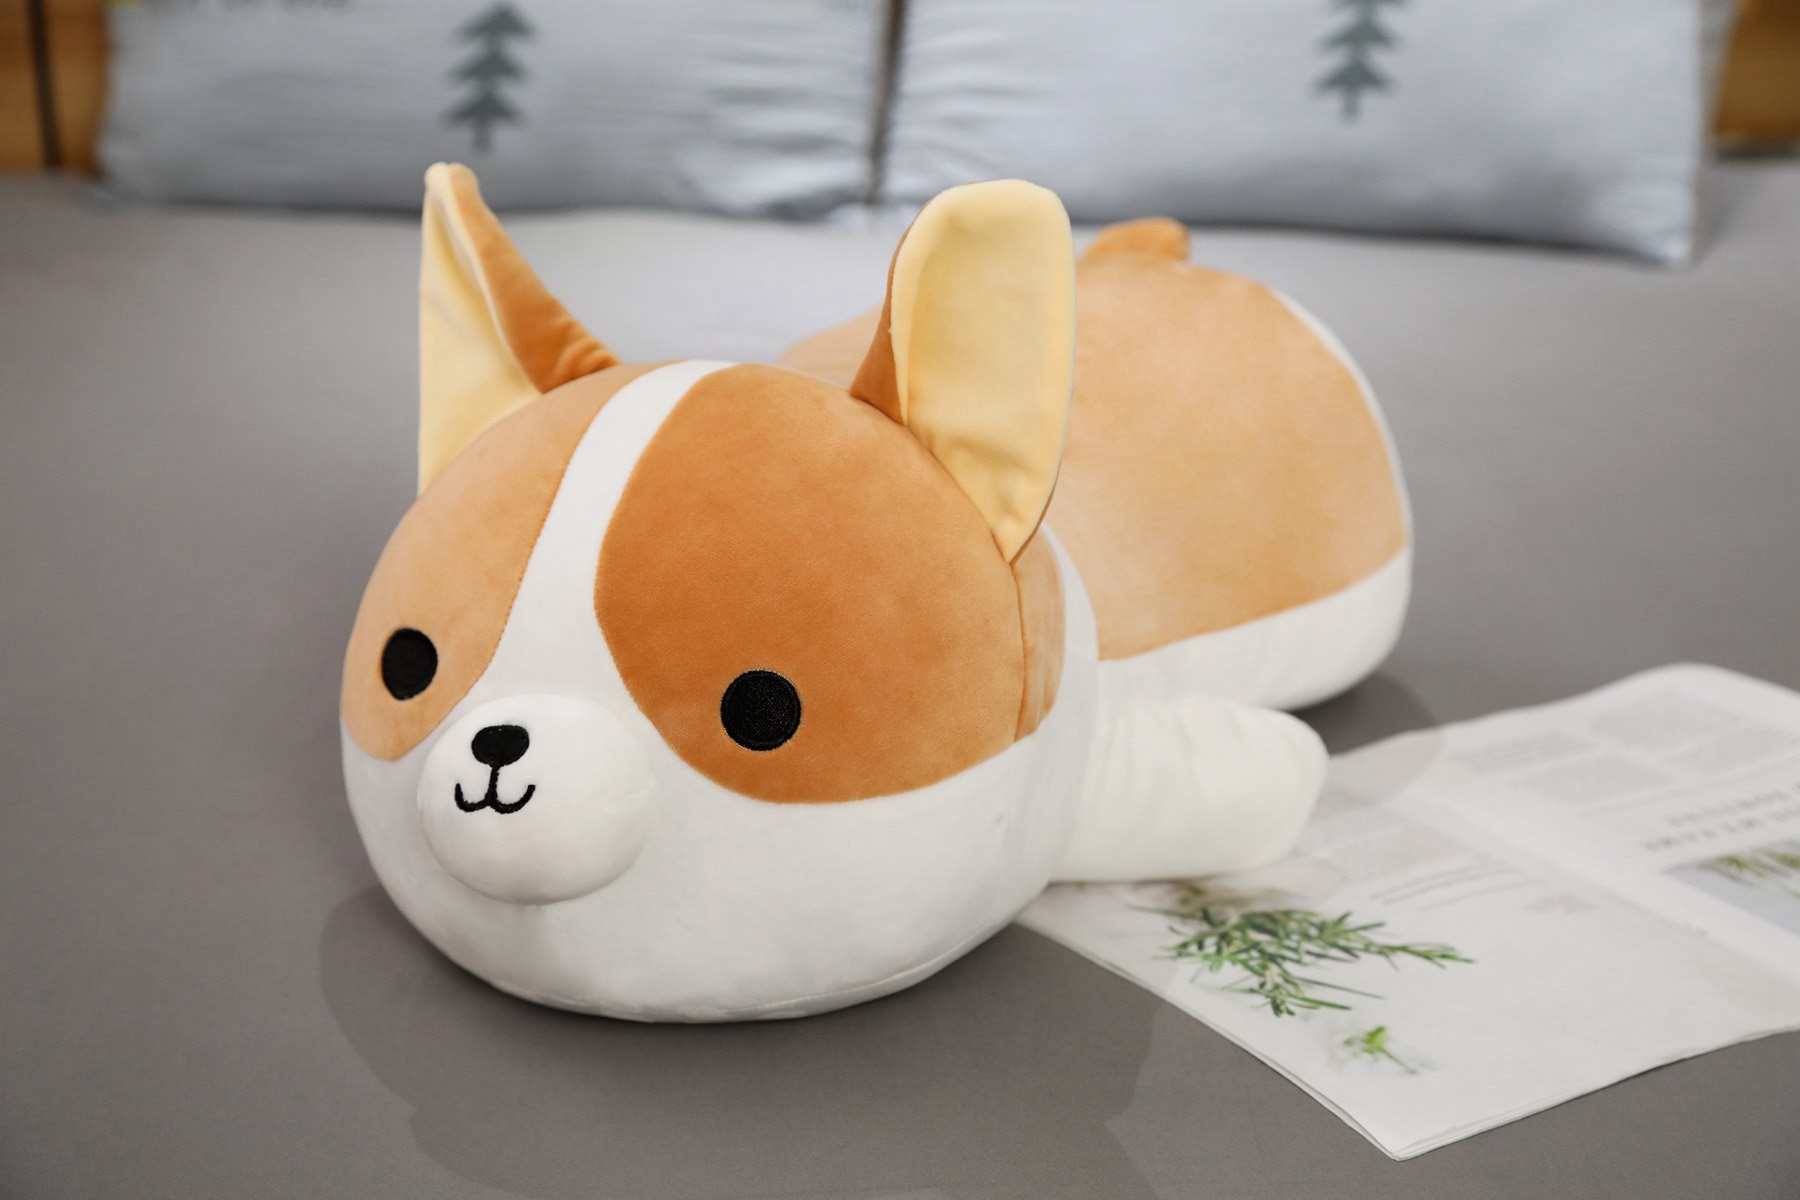 40-85cm Giant Size Cute Corgi Dog Plush Toys Stuffed Animal Puppy Dog Pillow Soft Lovely Doll Kawaii Christmas Gift for Kids